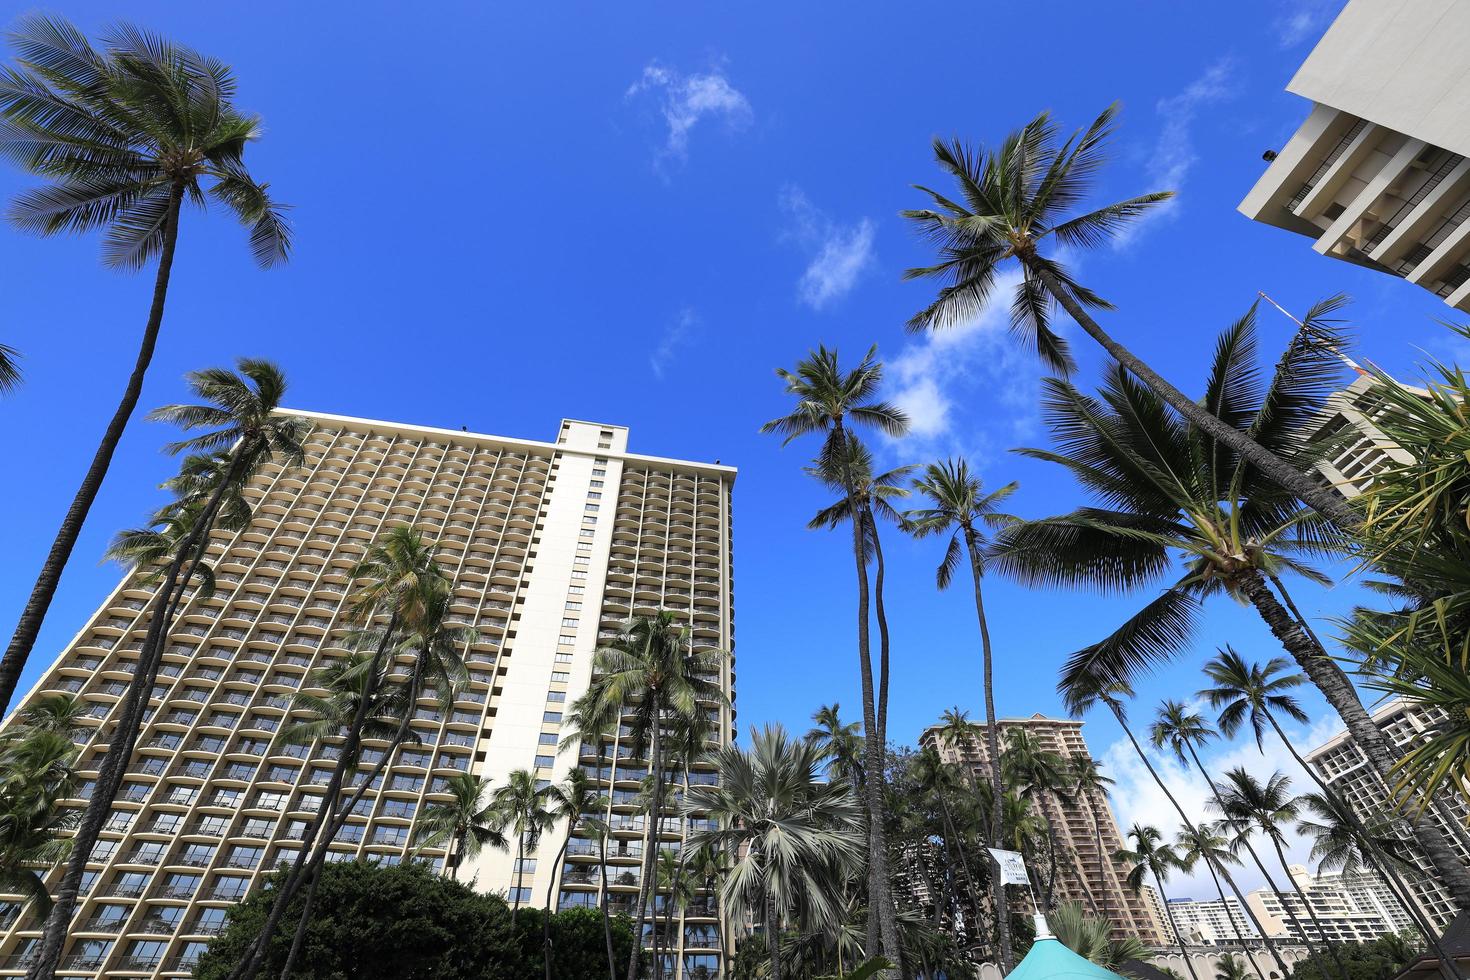 Luxury Hotels and Palm Trees at Waikiki Beach, Hawaii photo